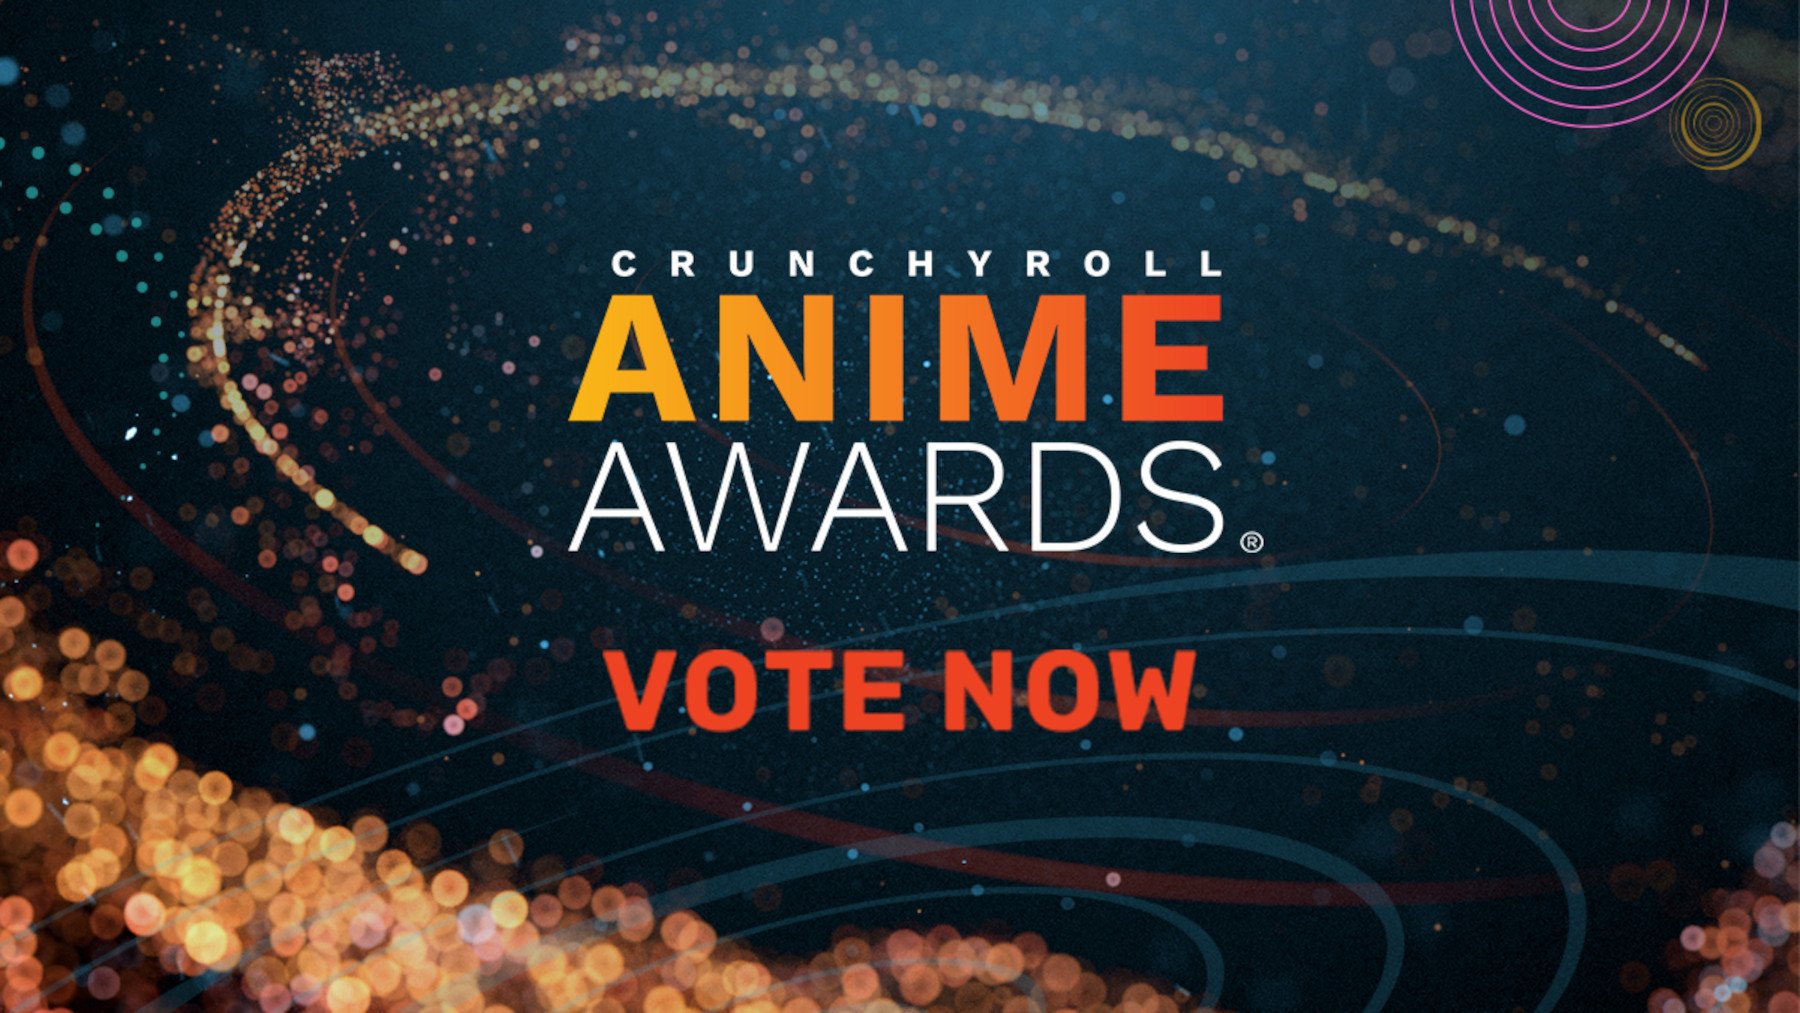 Cyberpunk: Edgerunners' Wins Anime of the Year at Crunchyroll Anime Awards  | Animation Magazine